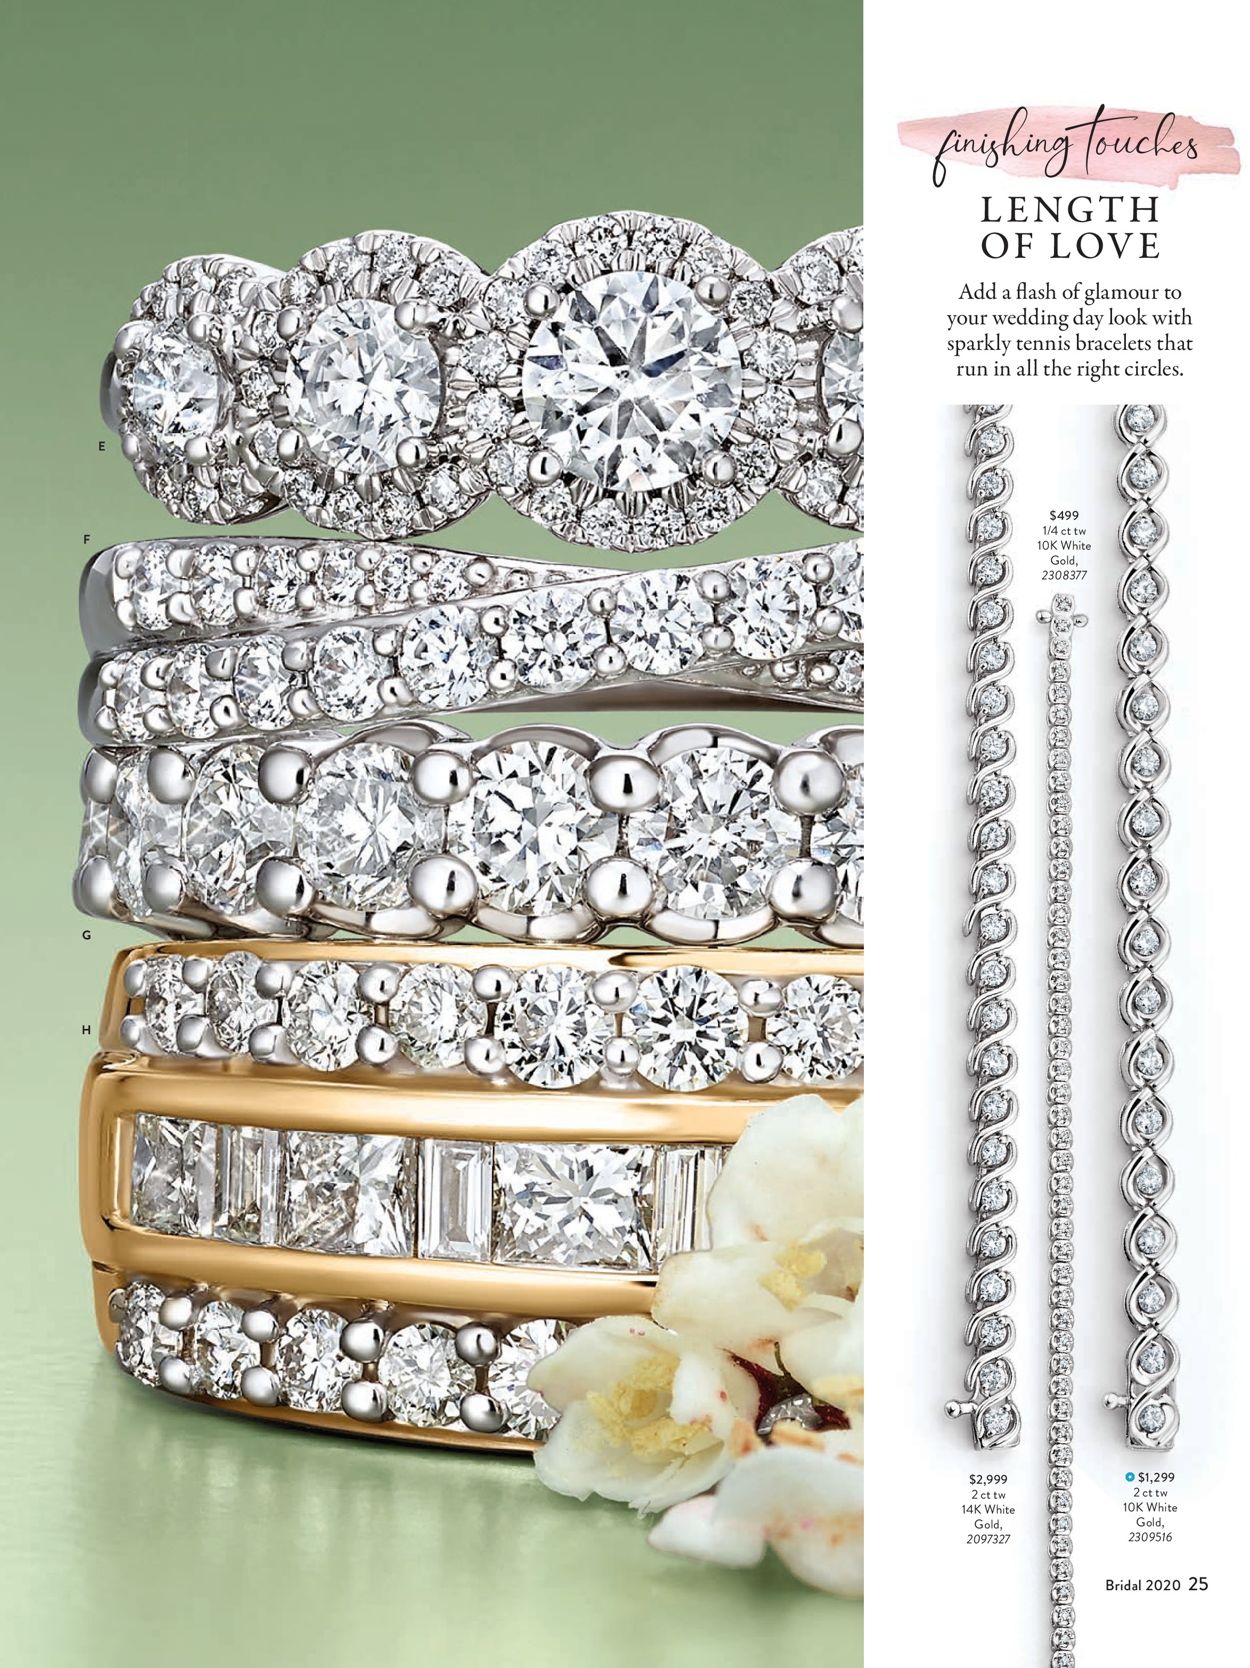 Catalogue Littman Jewelers from 11/28/2020